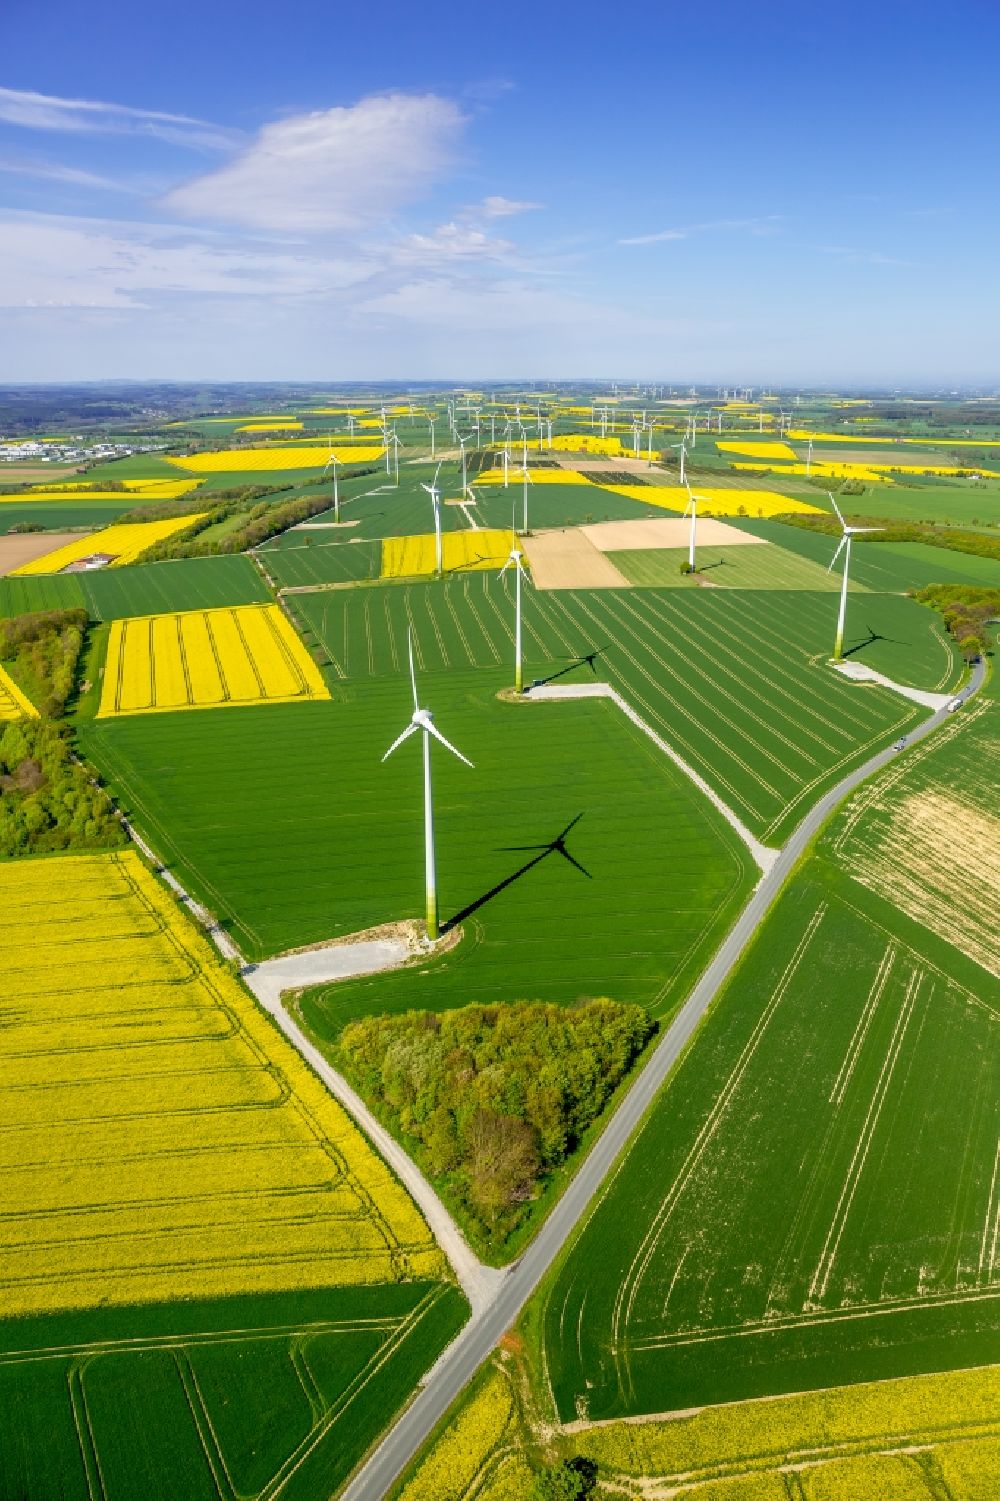 Aerial image Rüthen - Wind turbine windmills on a field in Ruethen in the state North Rhine-Westphalia, Germany